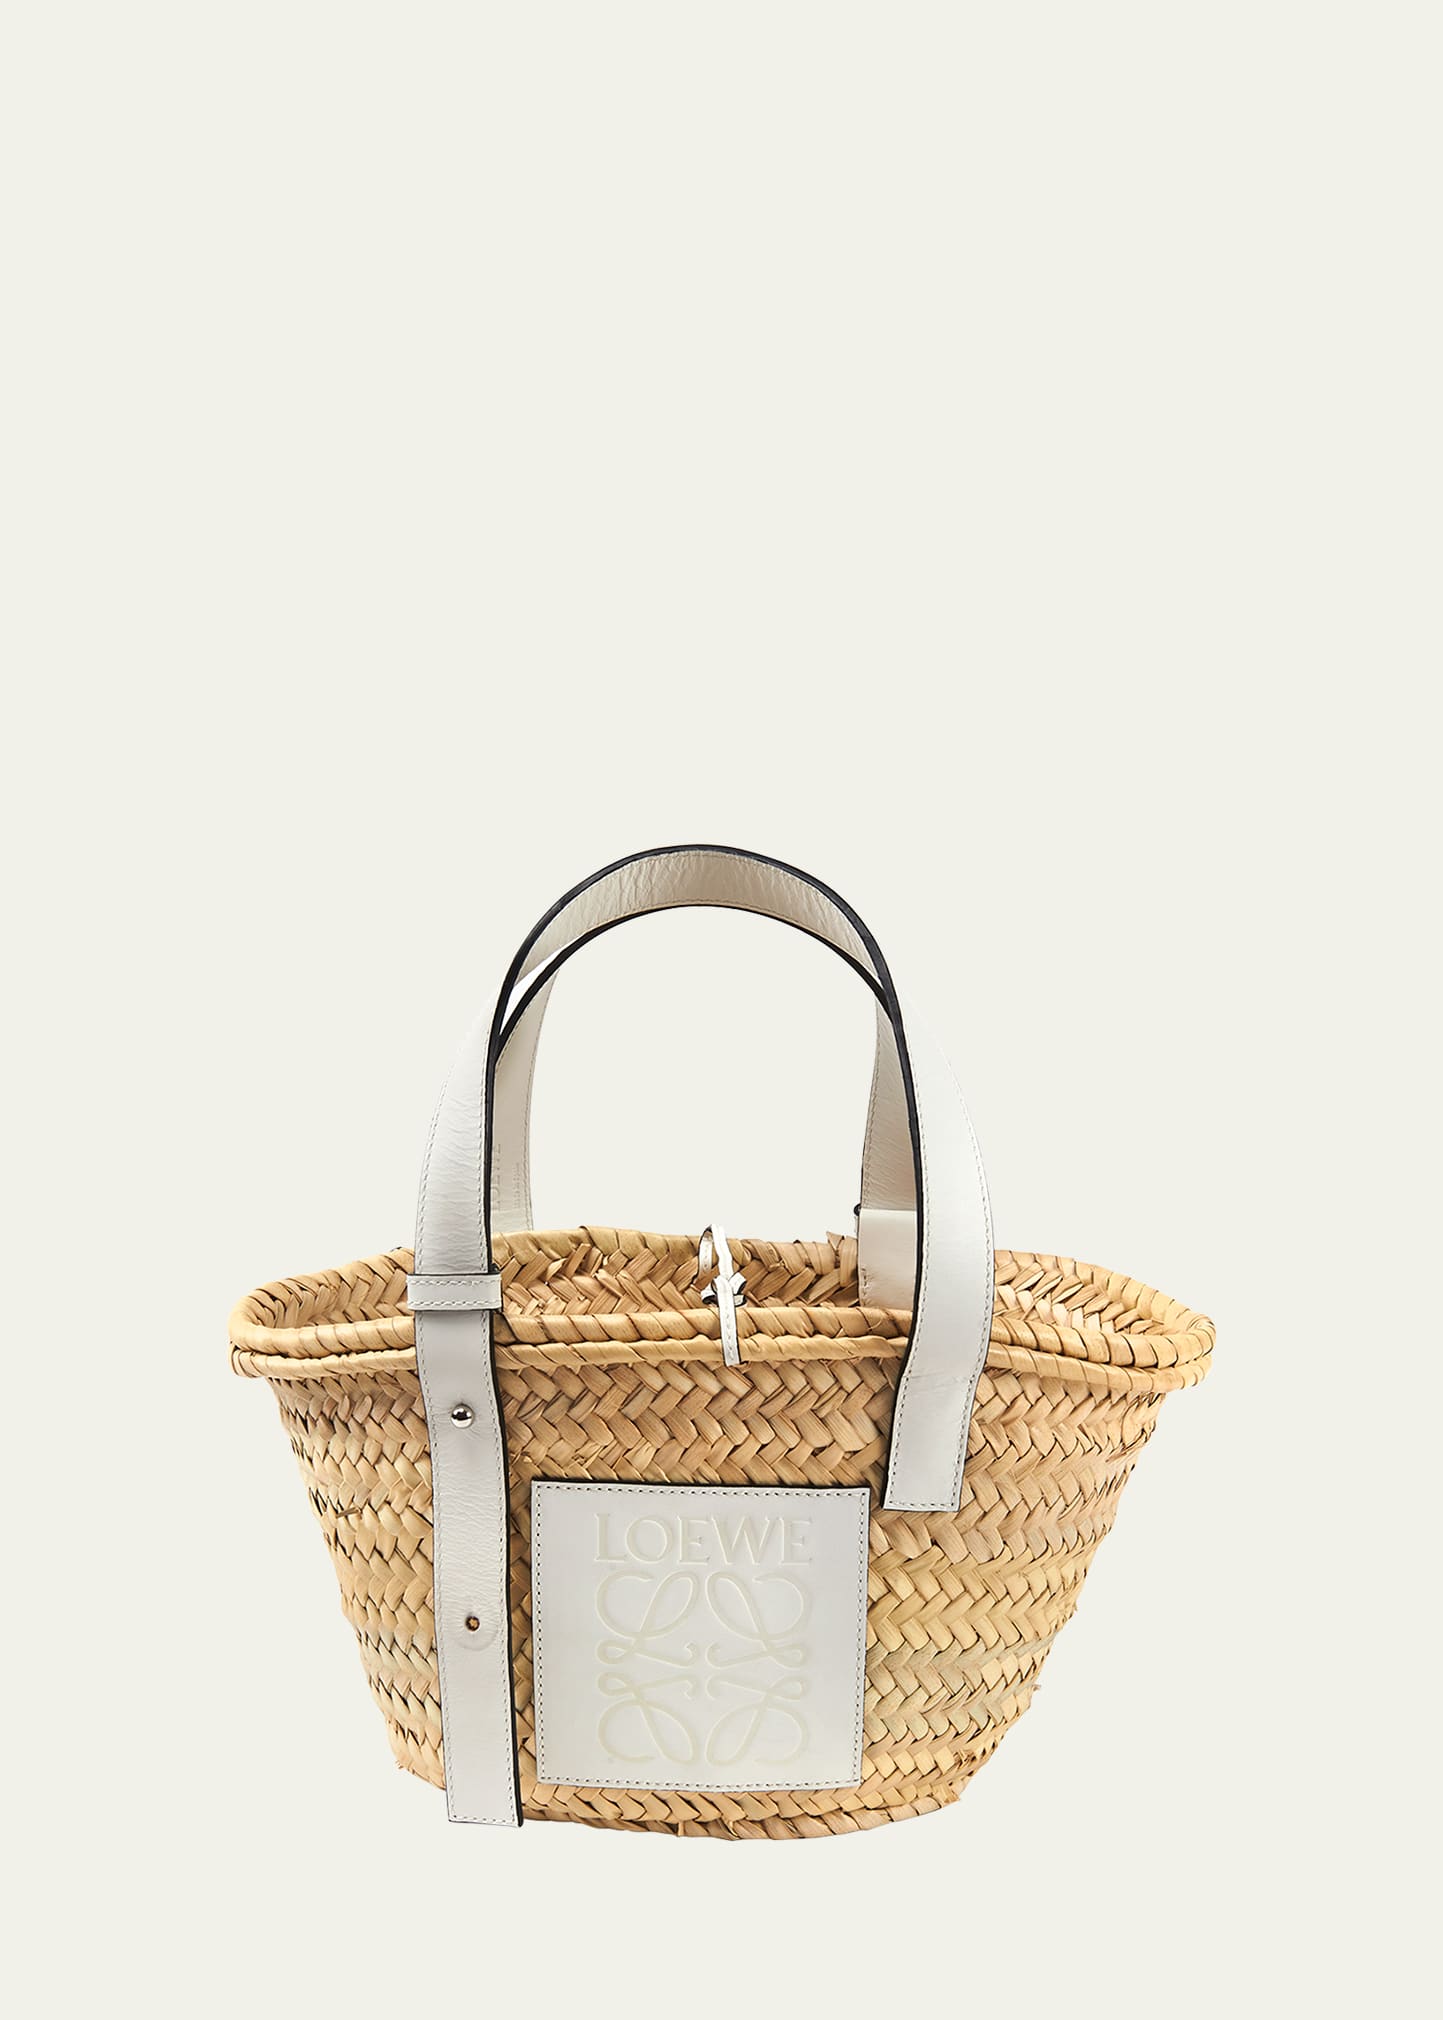 Loewe x Paula's Ibiza Basket Small Woven Palm Tote Bag